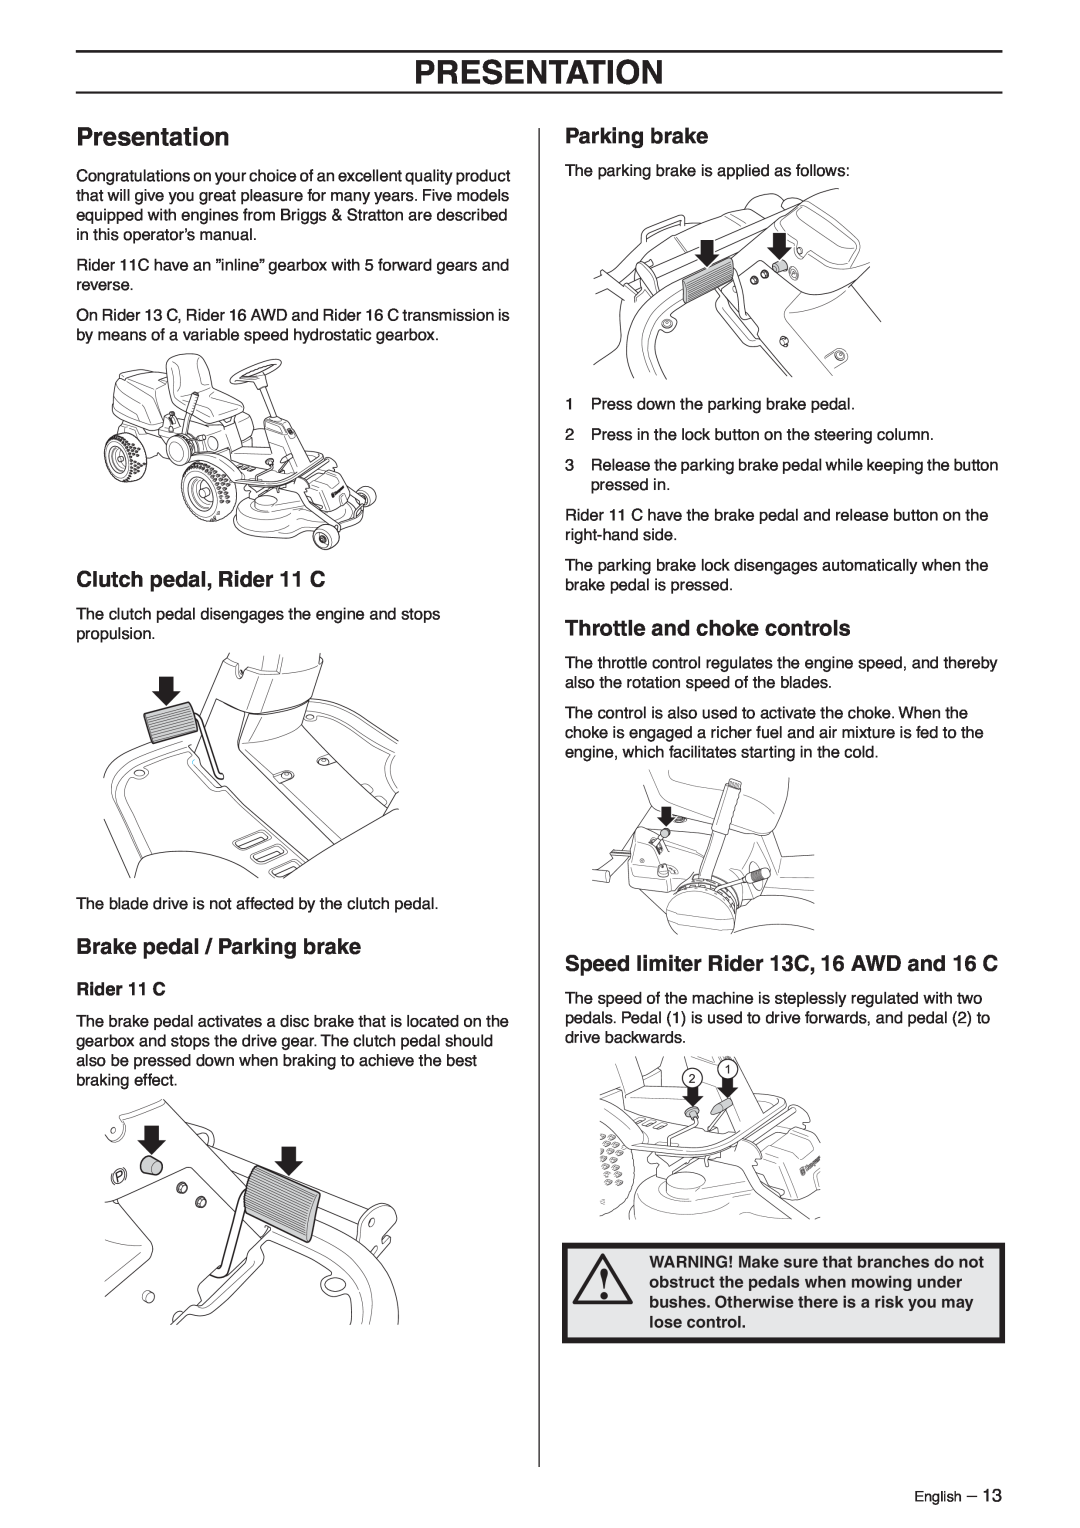 Husqvarna 16 AWD, 13 C Presentation, Clutch pedal, Rider 11 C, Brake pedal / Parking brake, Throttle and choke controls 